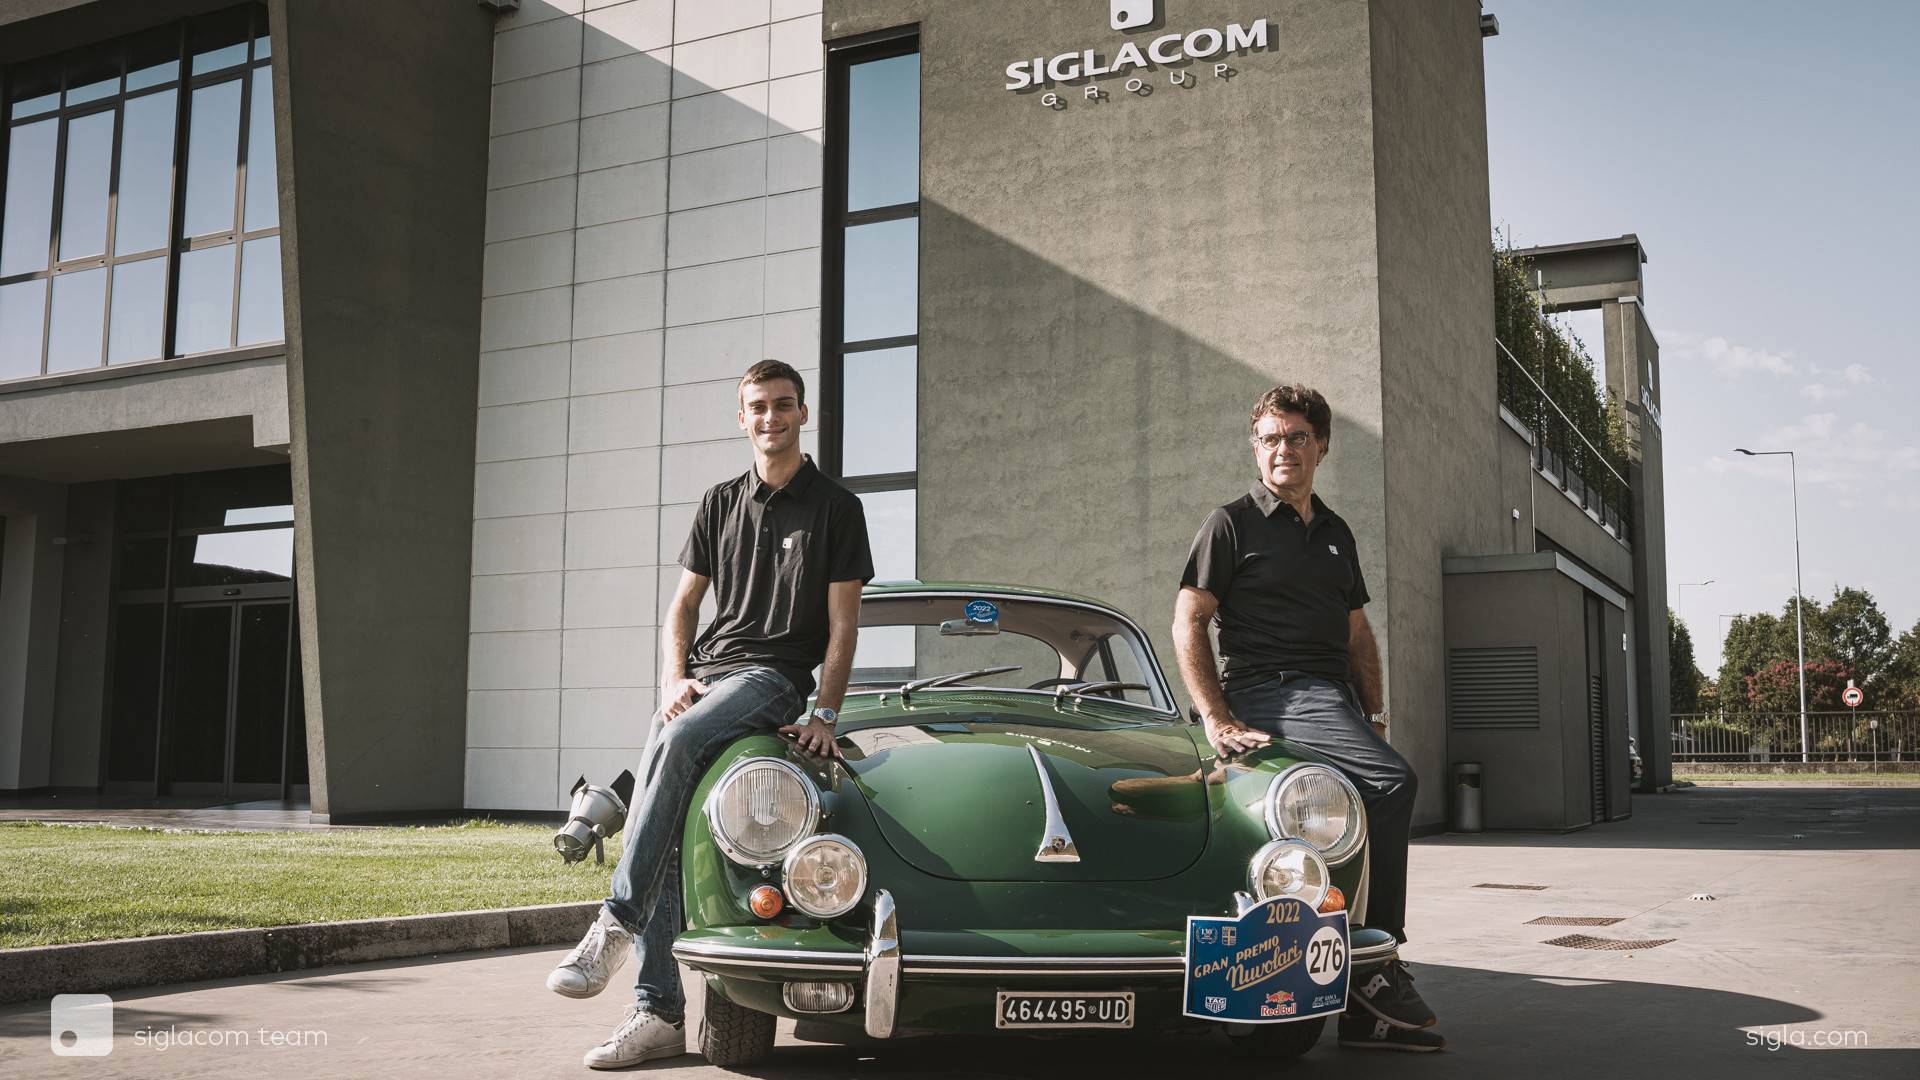 Siglacom Team Gran premio Nuvolari 2022